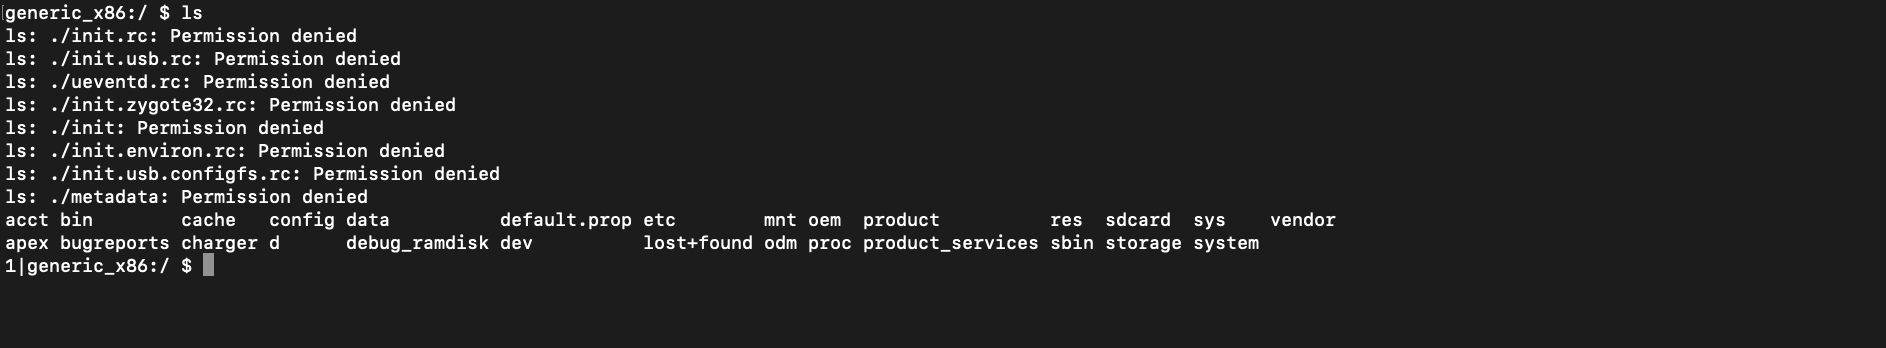 mac address terminal emulator command roots